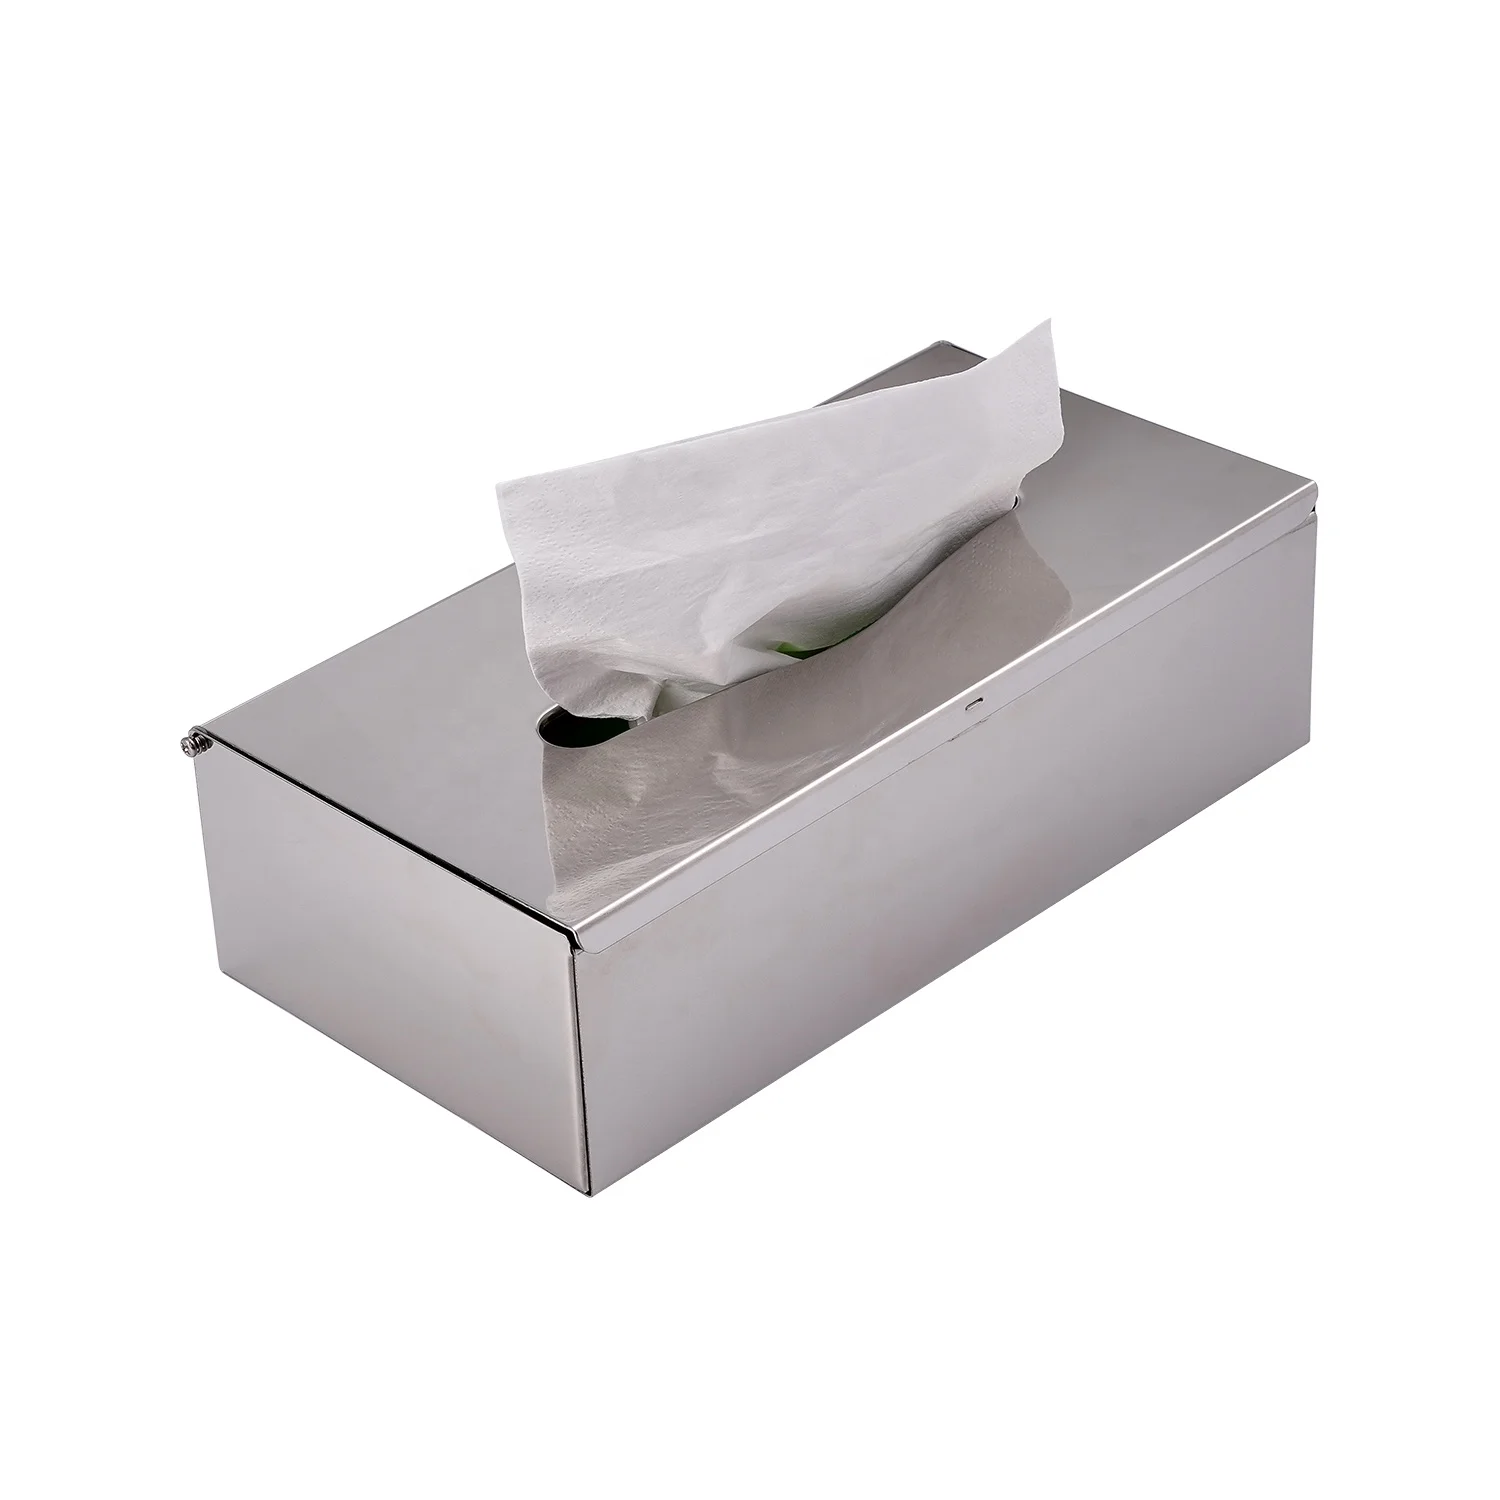 

Rectangular Stand Paper Facial Tissue Box Cover Holder Stainless Steel Metal Napkin Dispenser, Silver